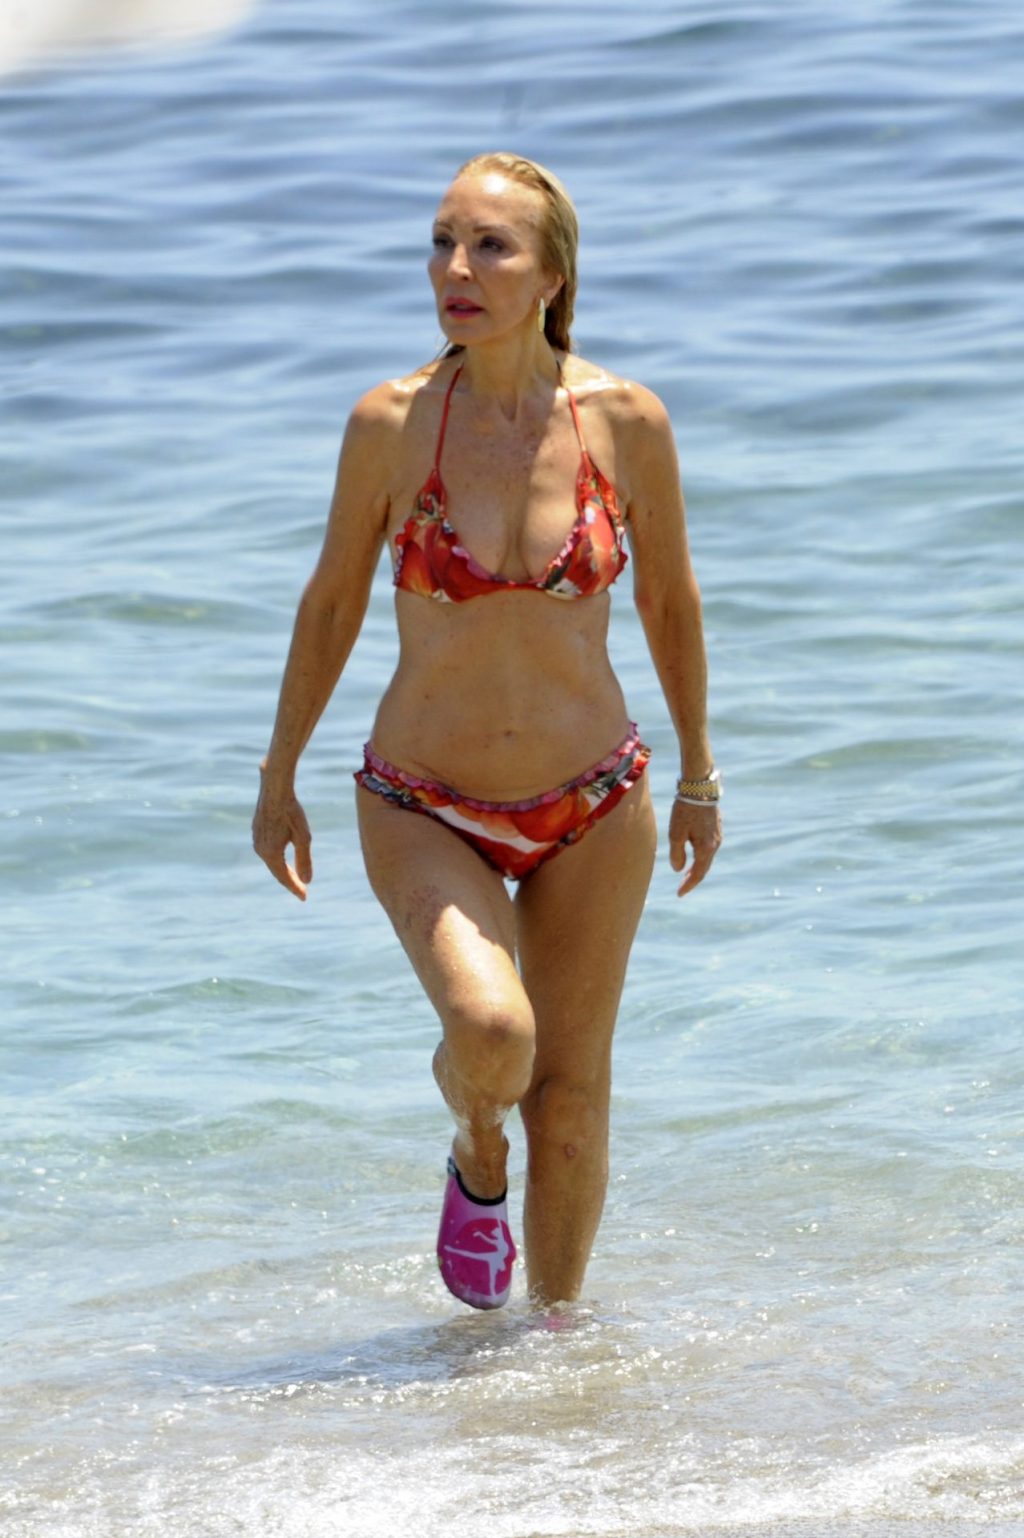 Carmen Lomana Shows Her Bikini Body in Marbella (7 Photos)